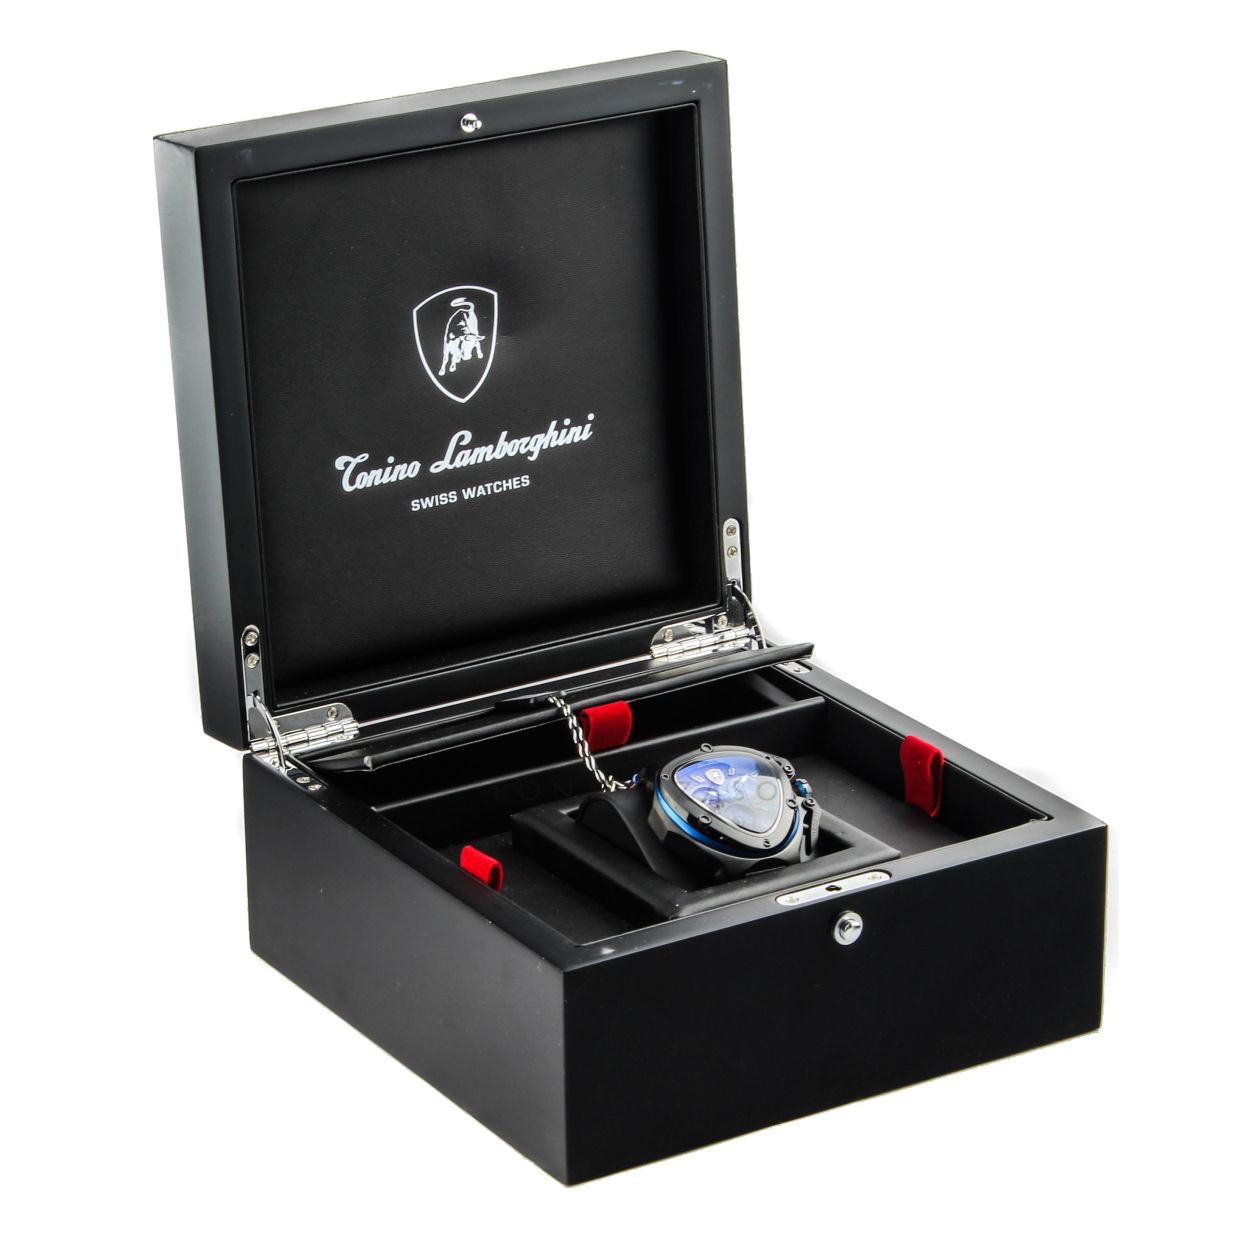 Zegarek męski Tonino Lamborghini T9SC + Dodatkowy pasek